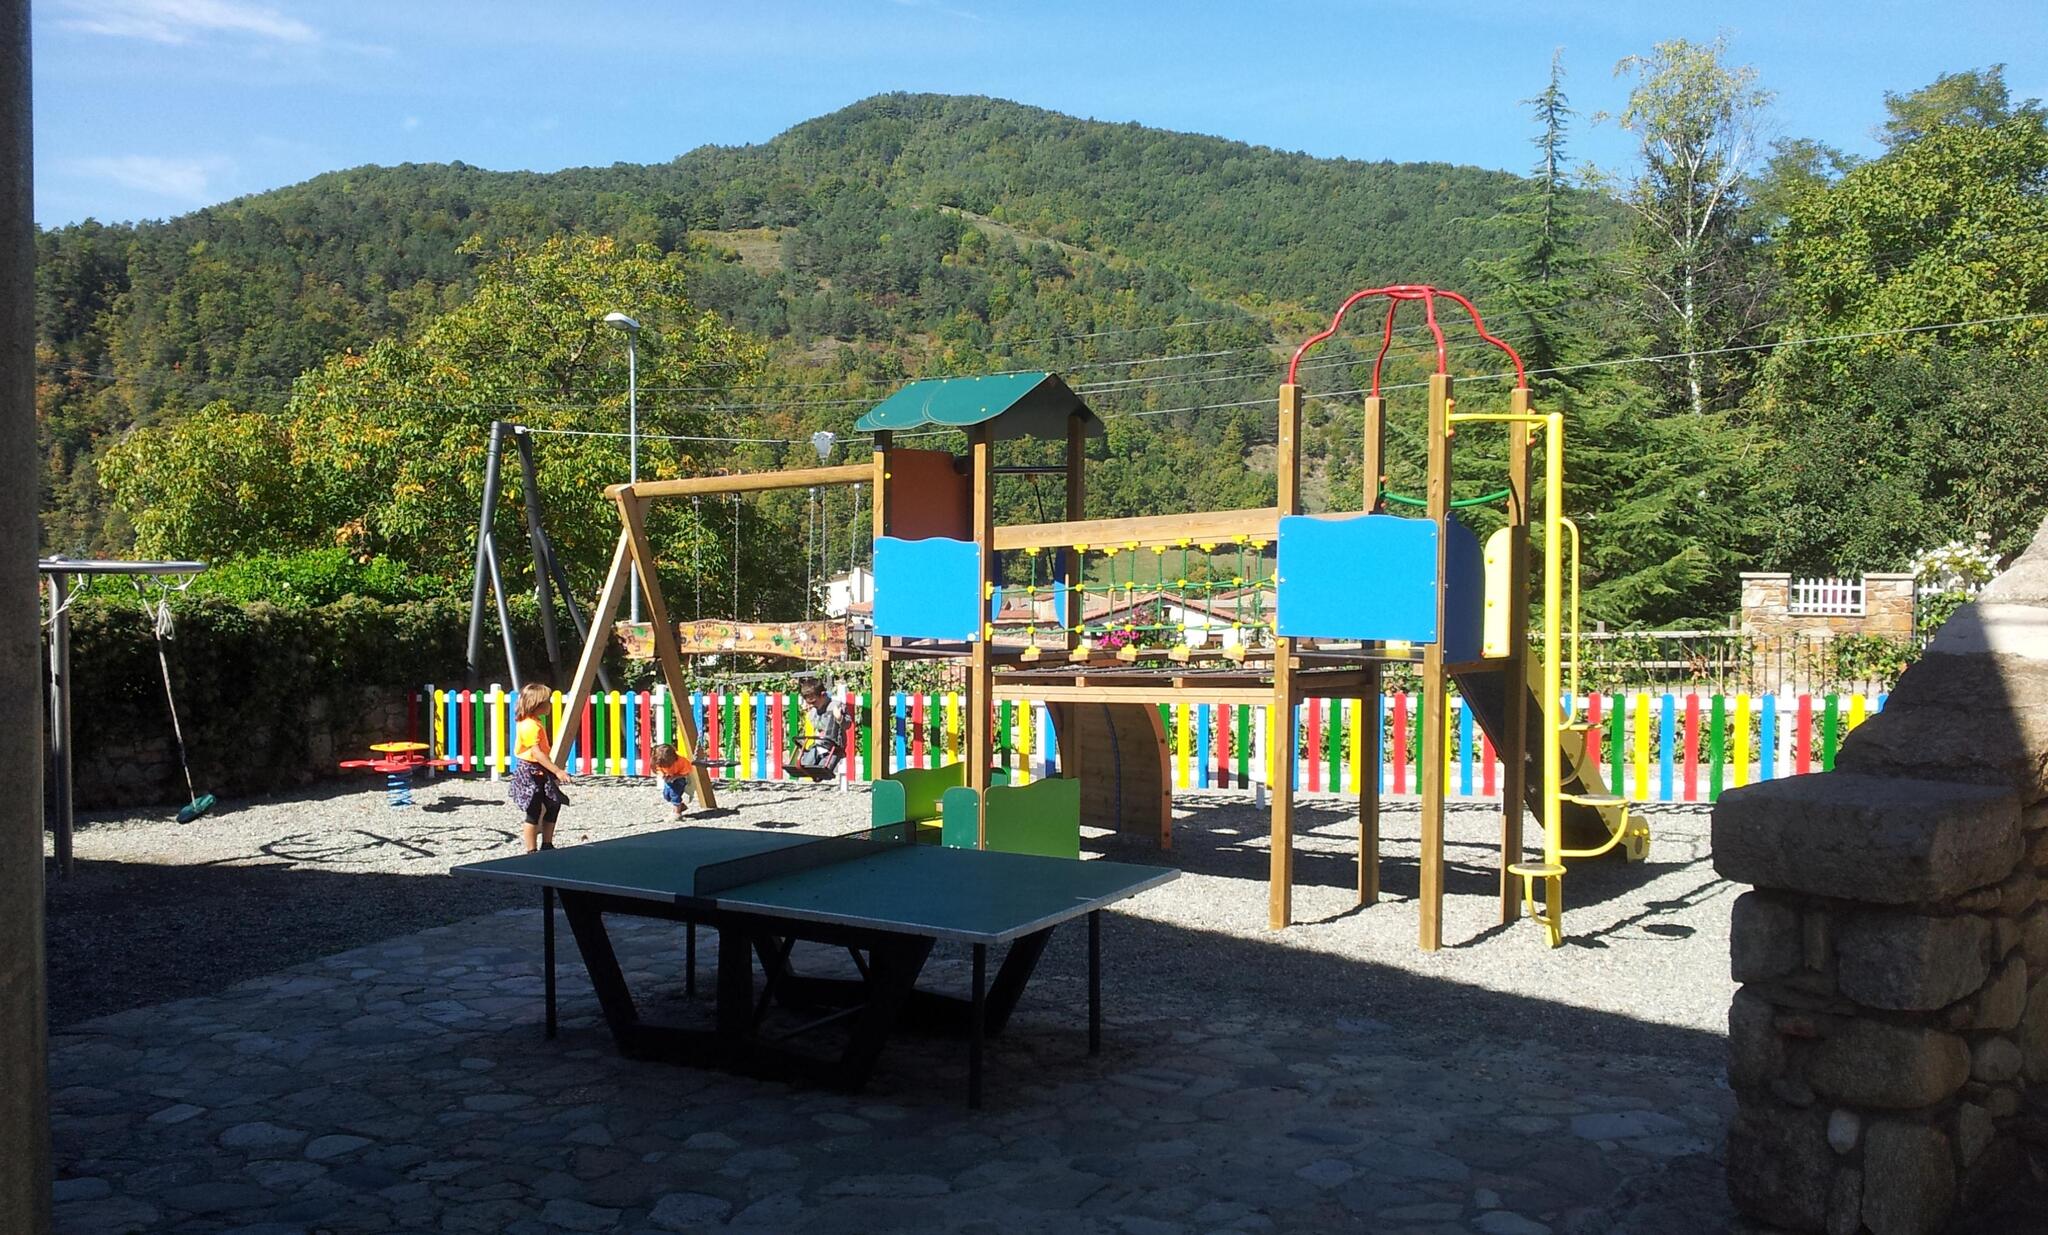 camping els roures 8521 Parque infantil del Camping els Roures en el pirieno catalan de Gerona